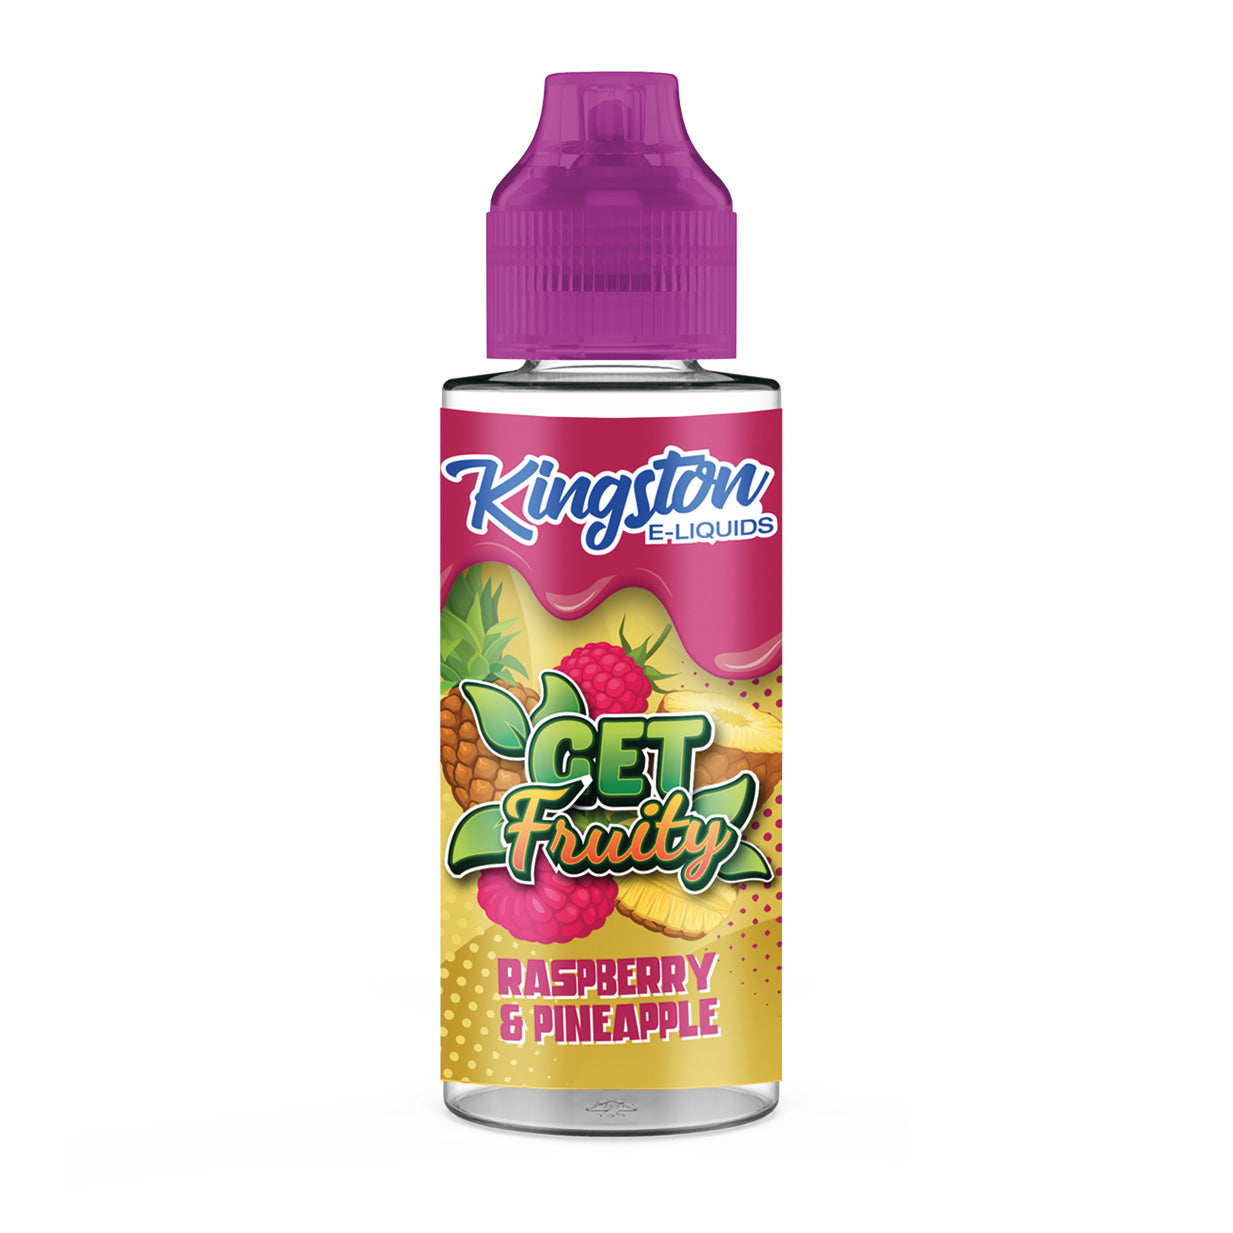 Raspberry & Pineapple by Kingston 120ML